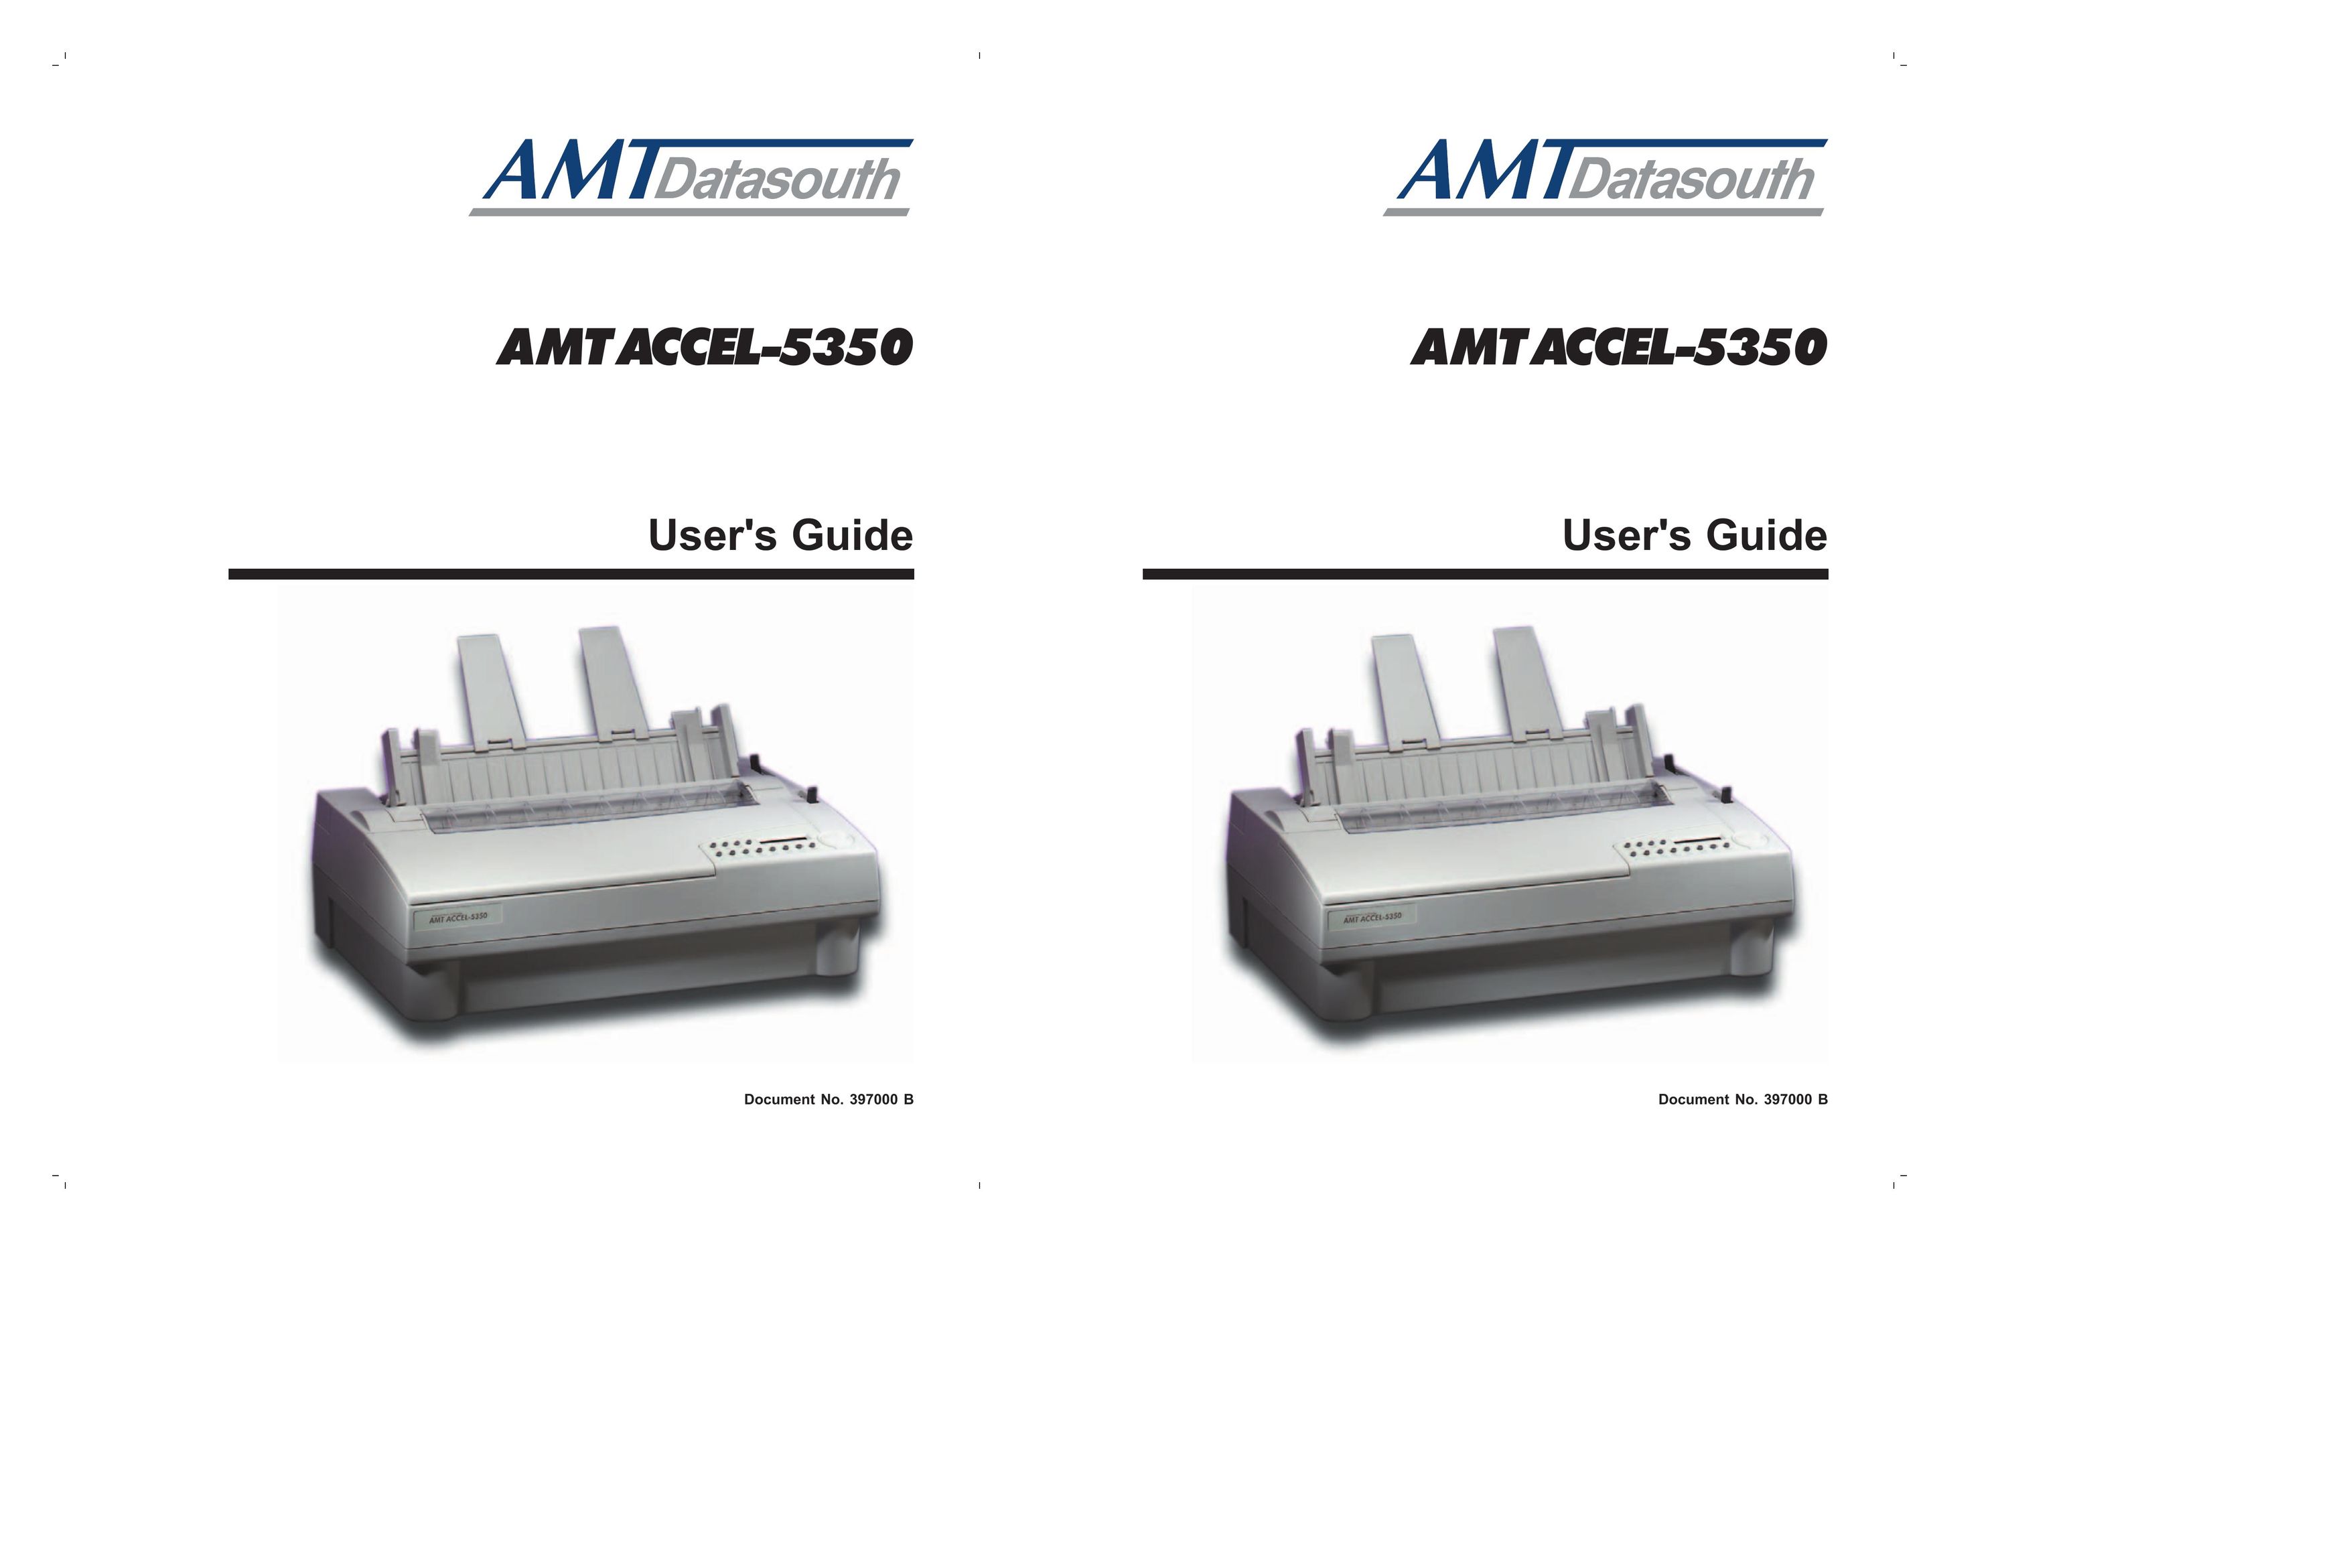 AMT Datasouth AMTACCEL-5350 Printer User Manual